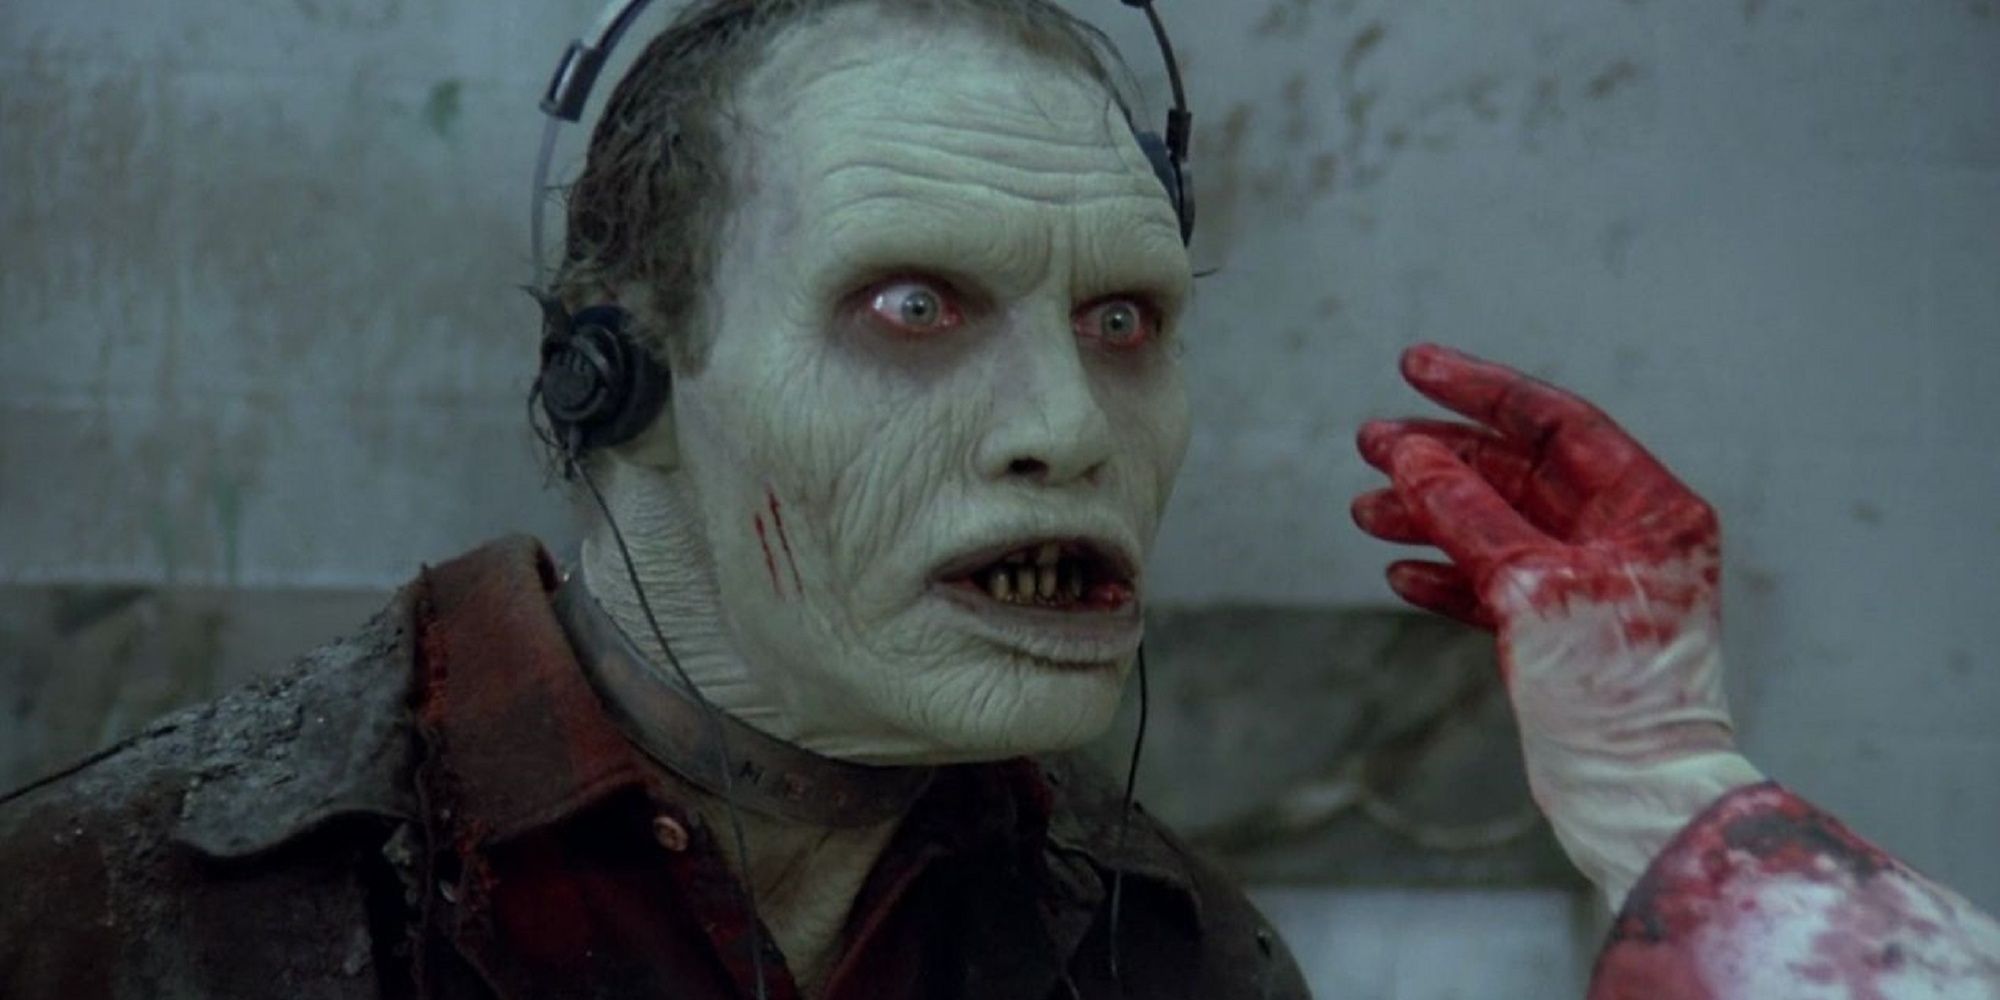 Zombie wearing headphones in 'Day of the Dead.'